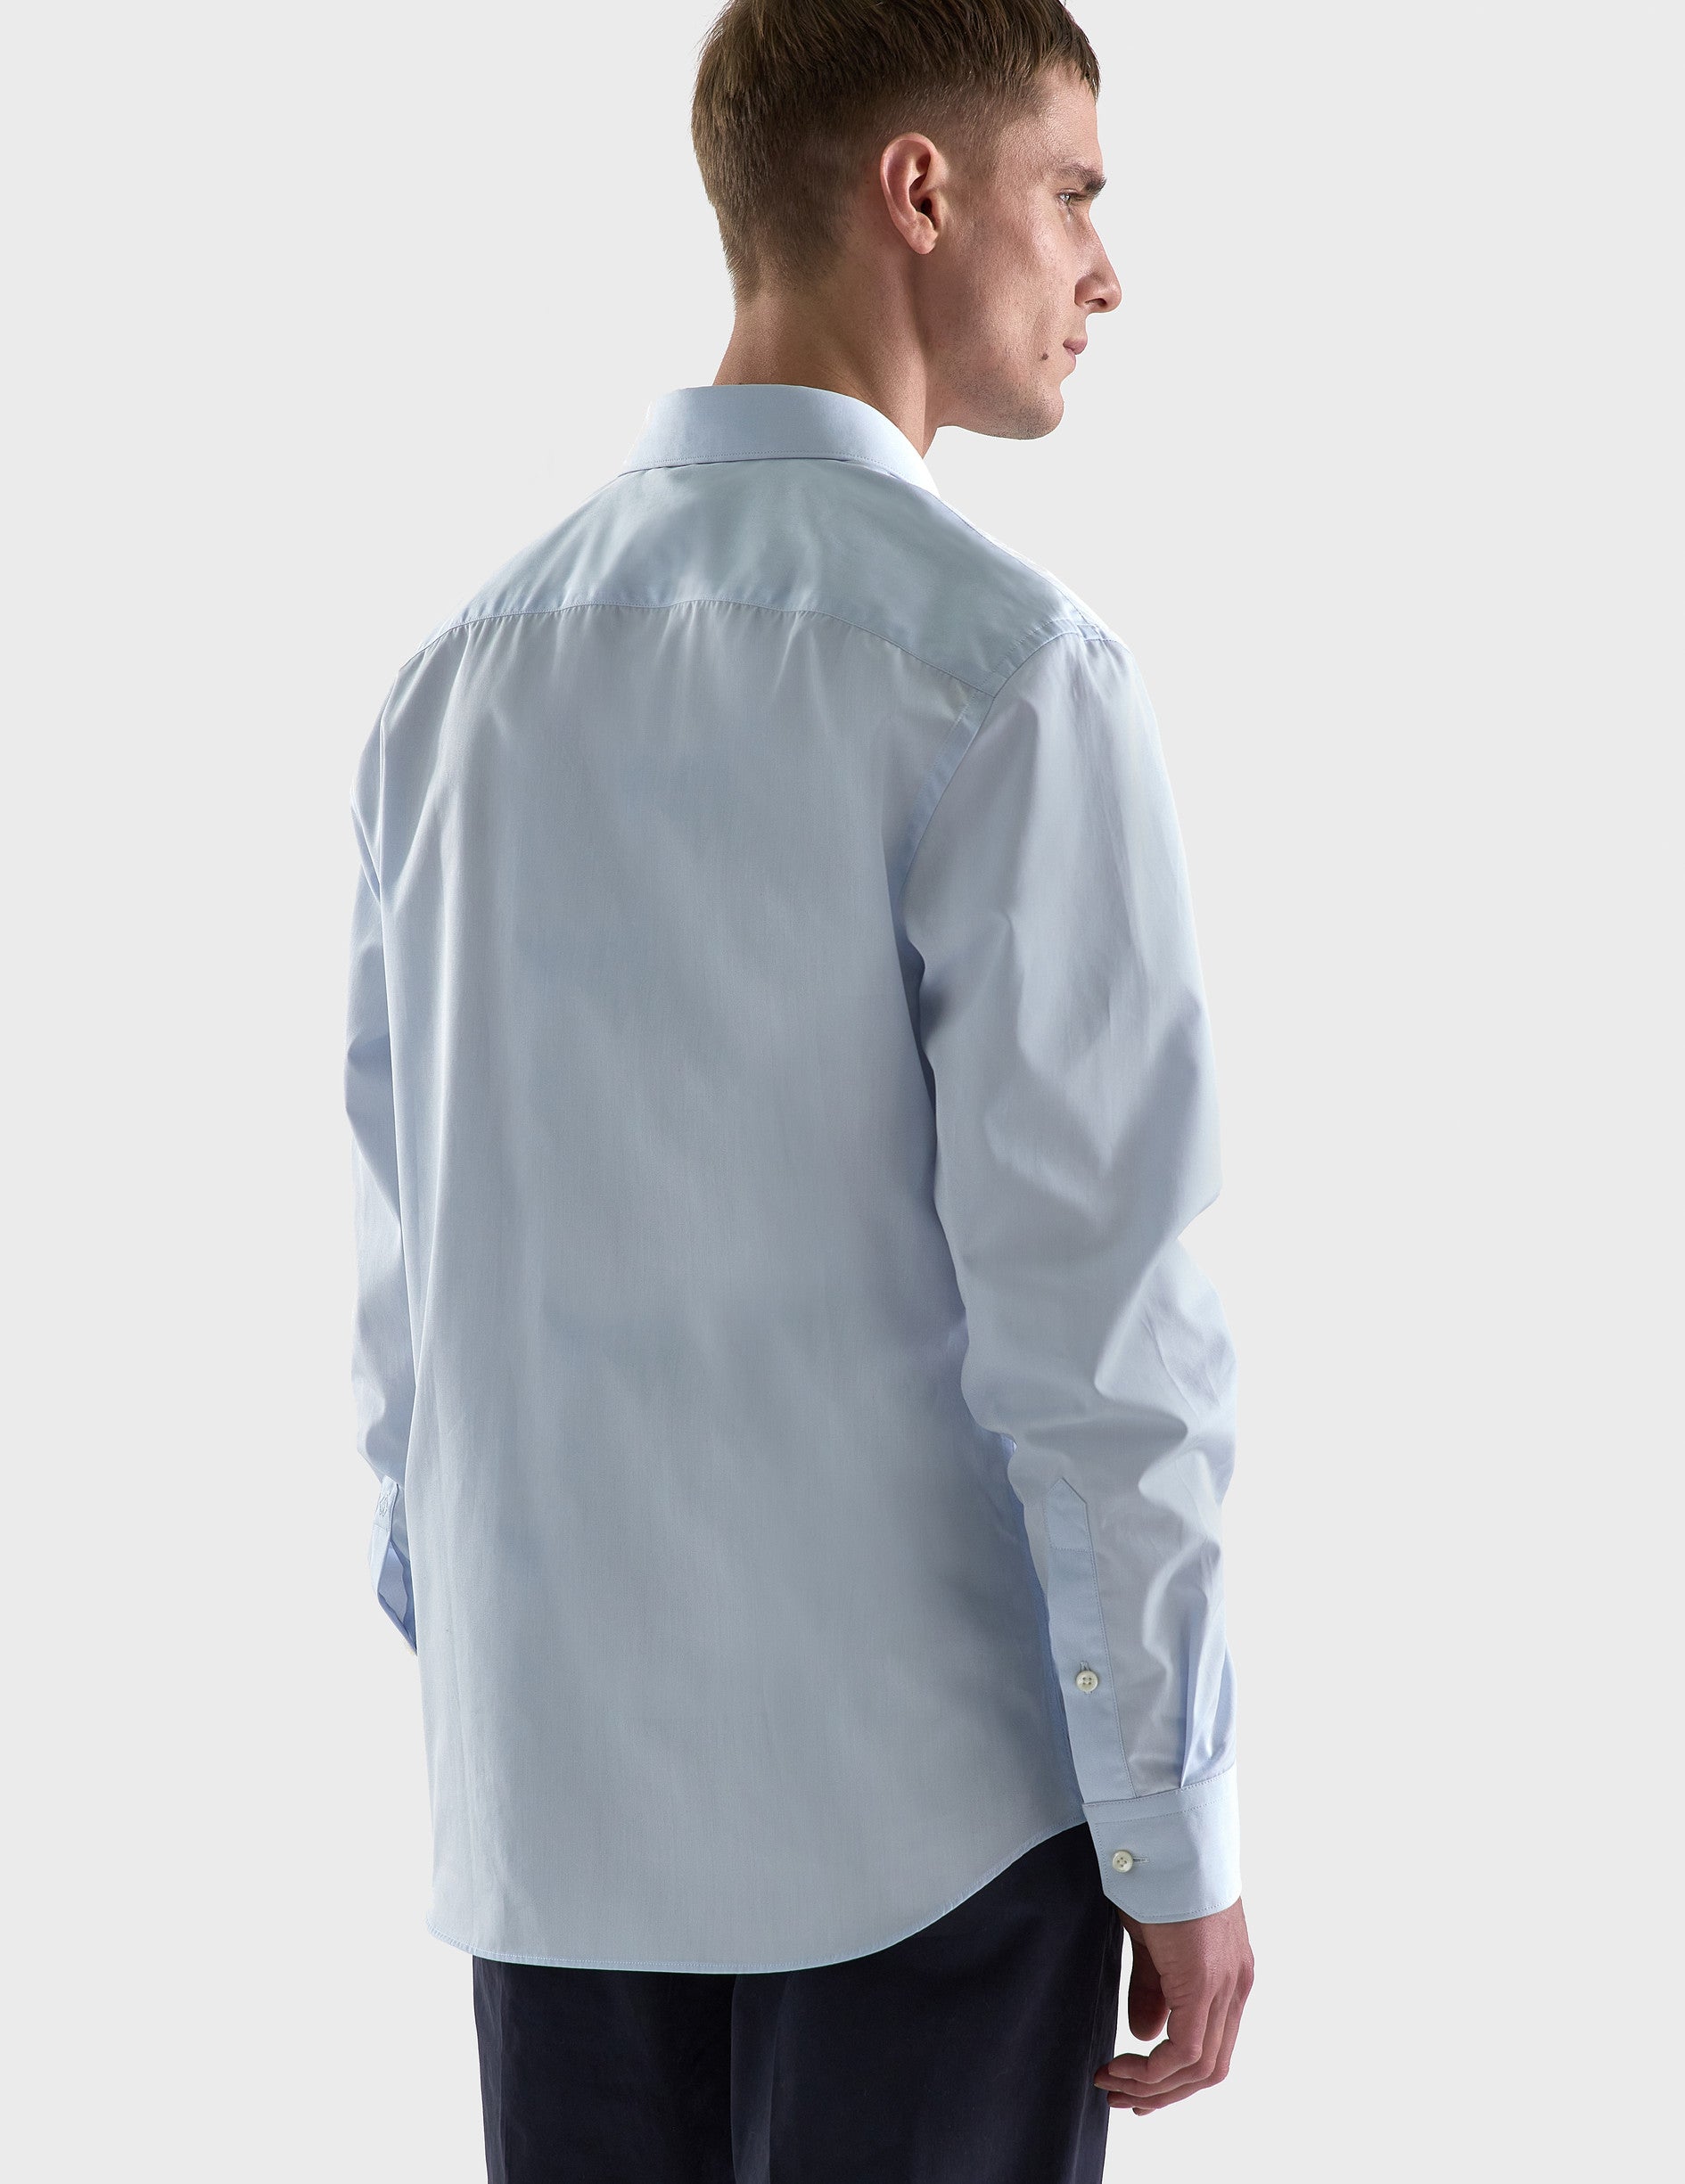 Semi-fitted wrinkle-free blue shirt - Poplin - Figaret Collar